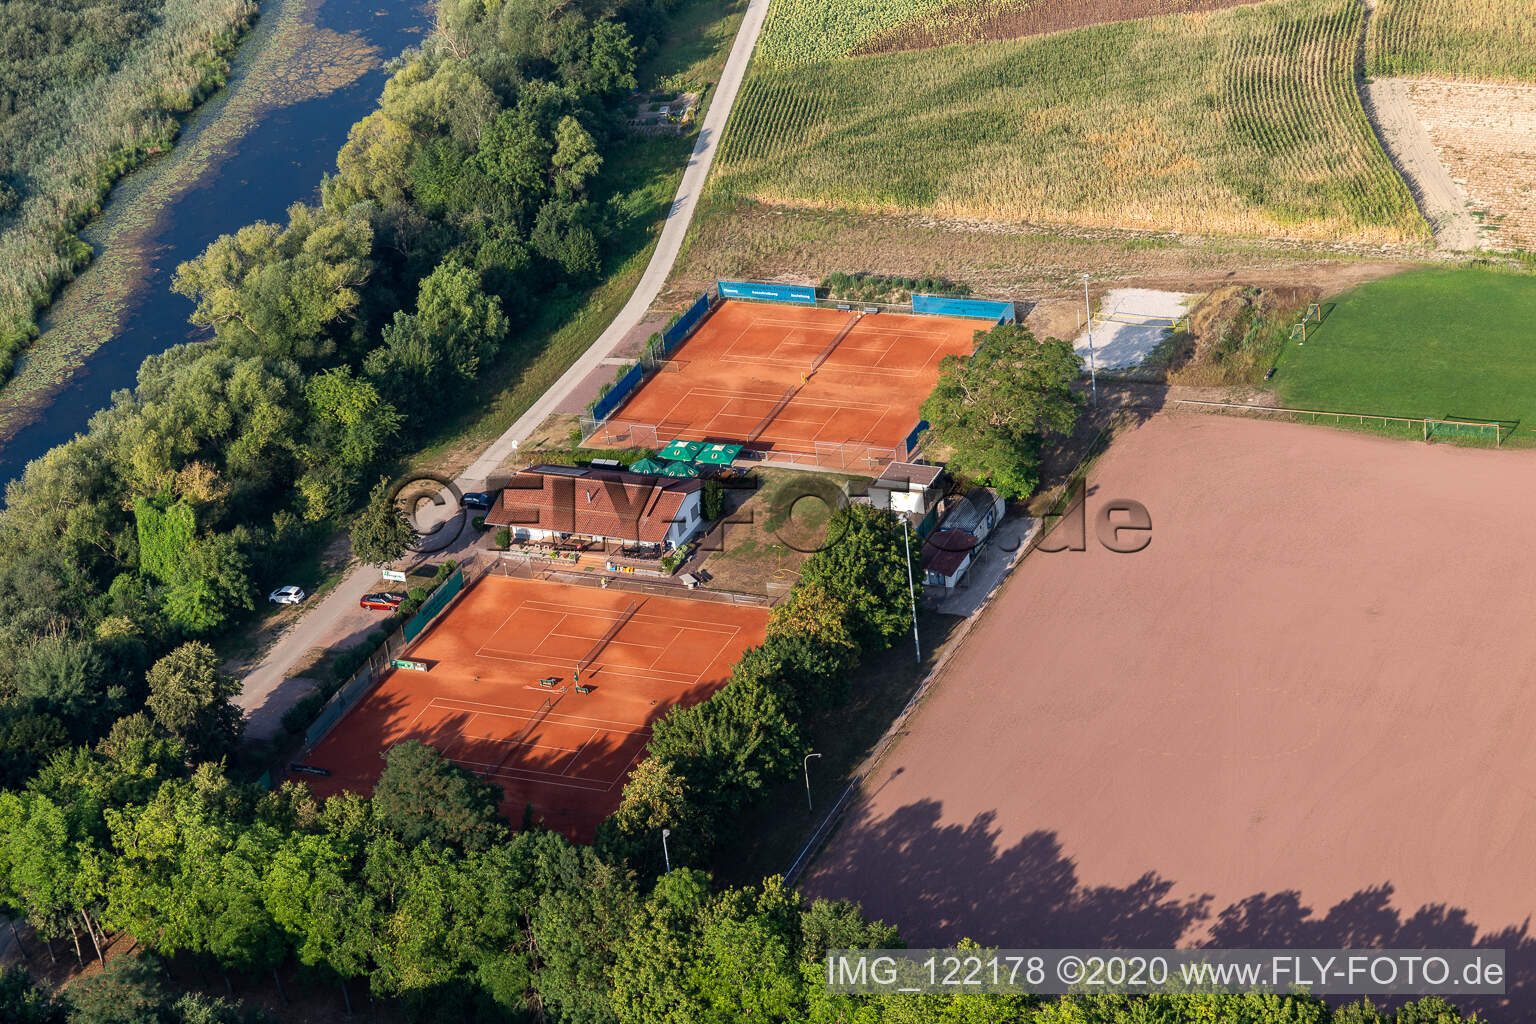 Tennisclub e.V in Neupotz im Bundesland Rheinland-Pfalz, Deutschland